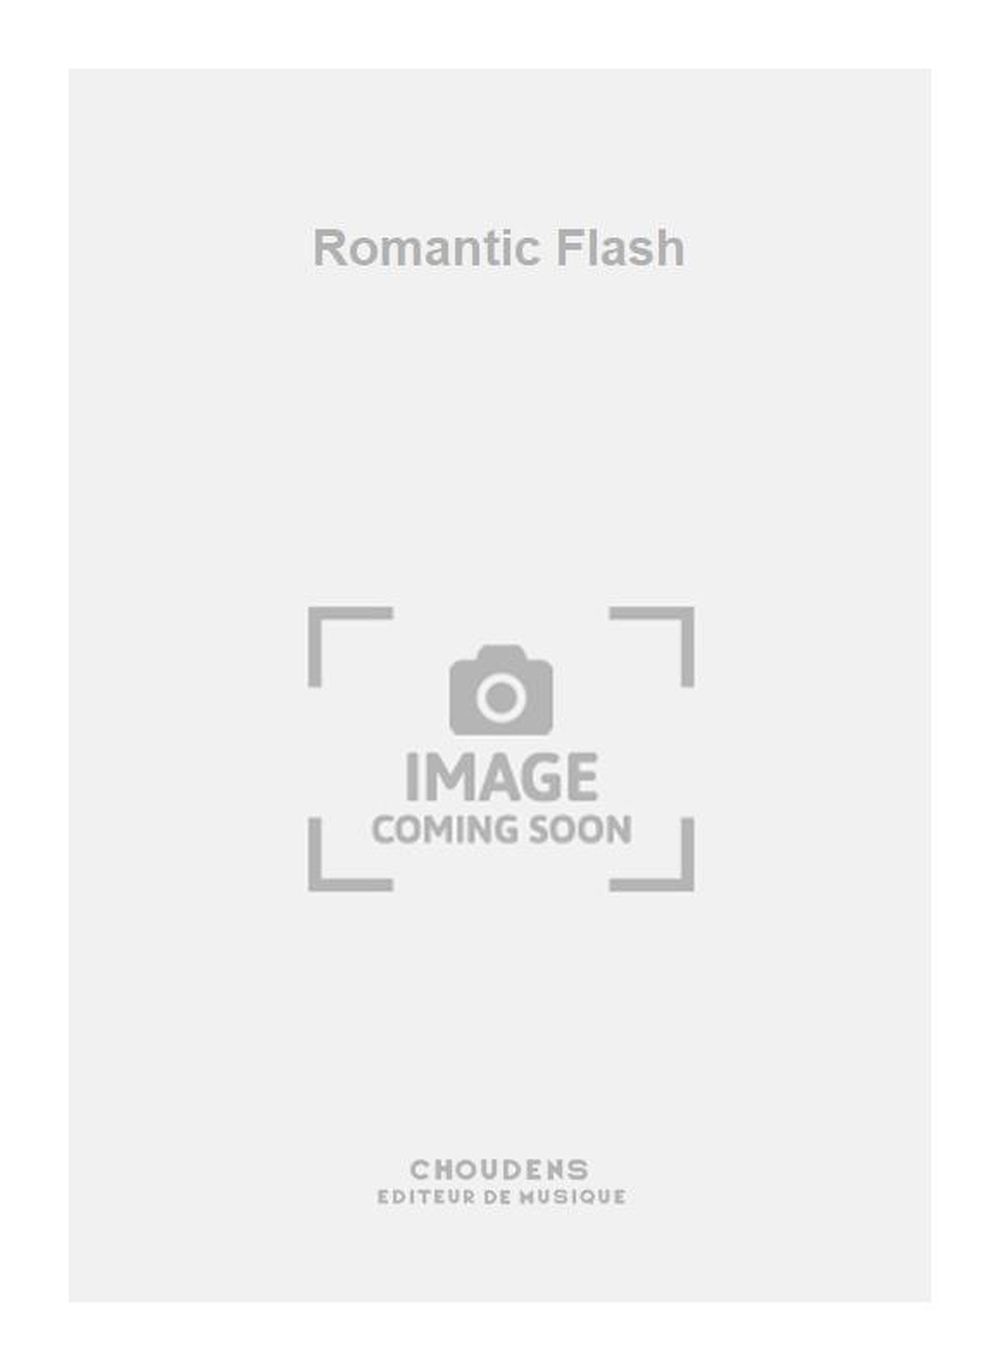 Georges Barboteu: Romantic Flash